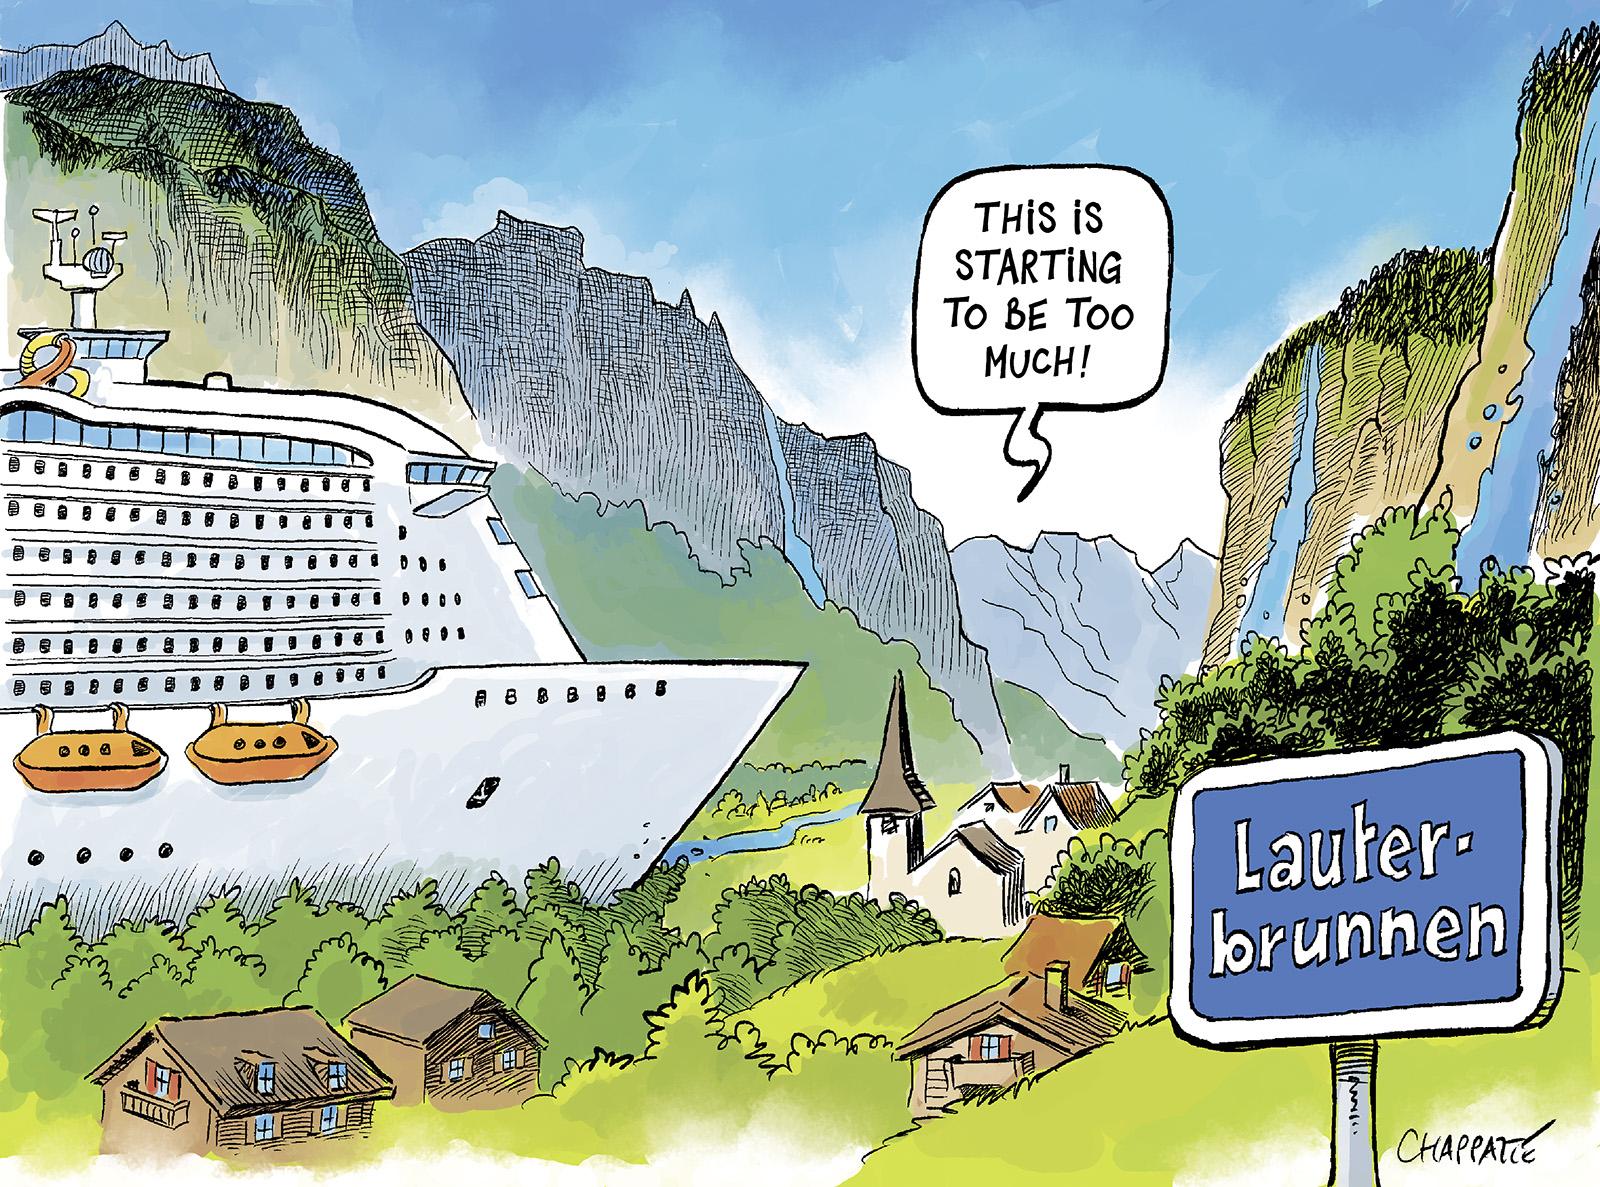 Switzerland hit by overtourism